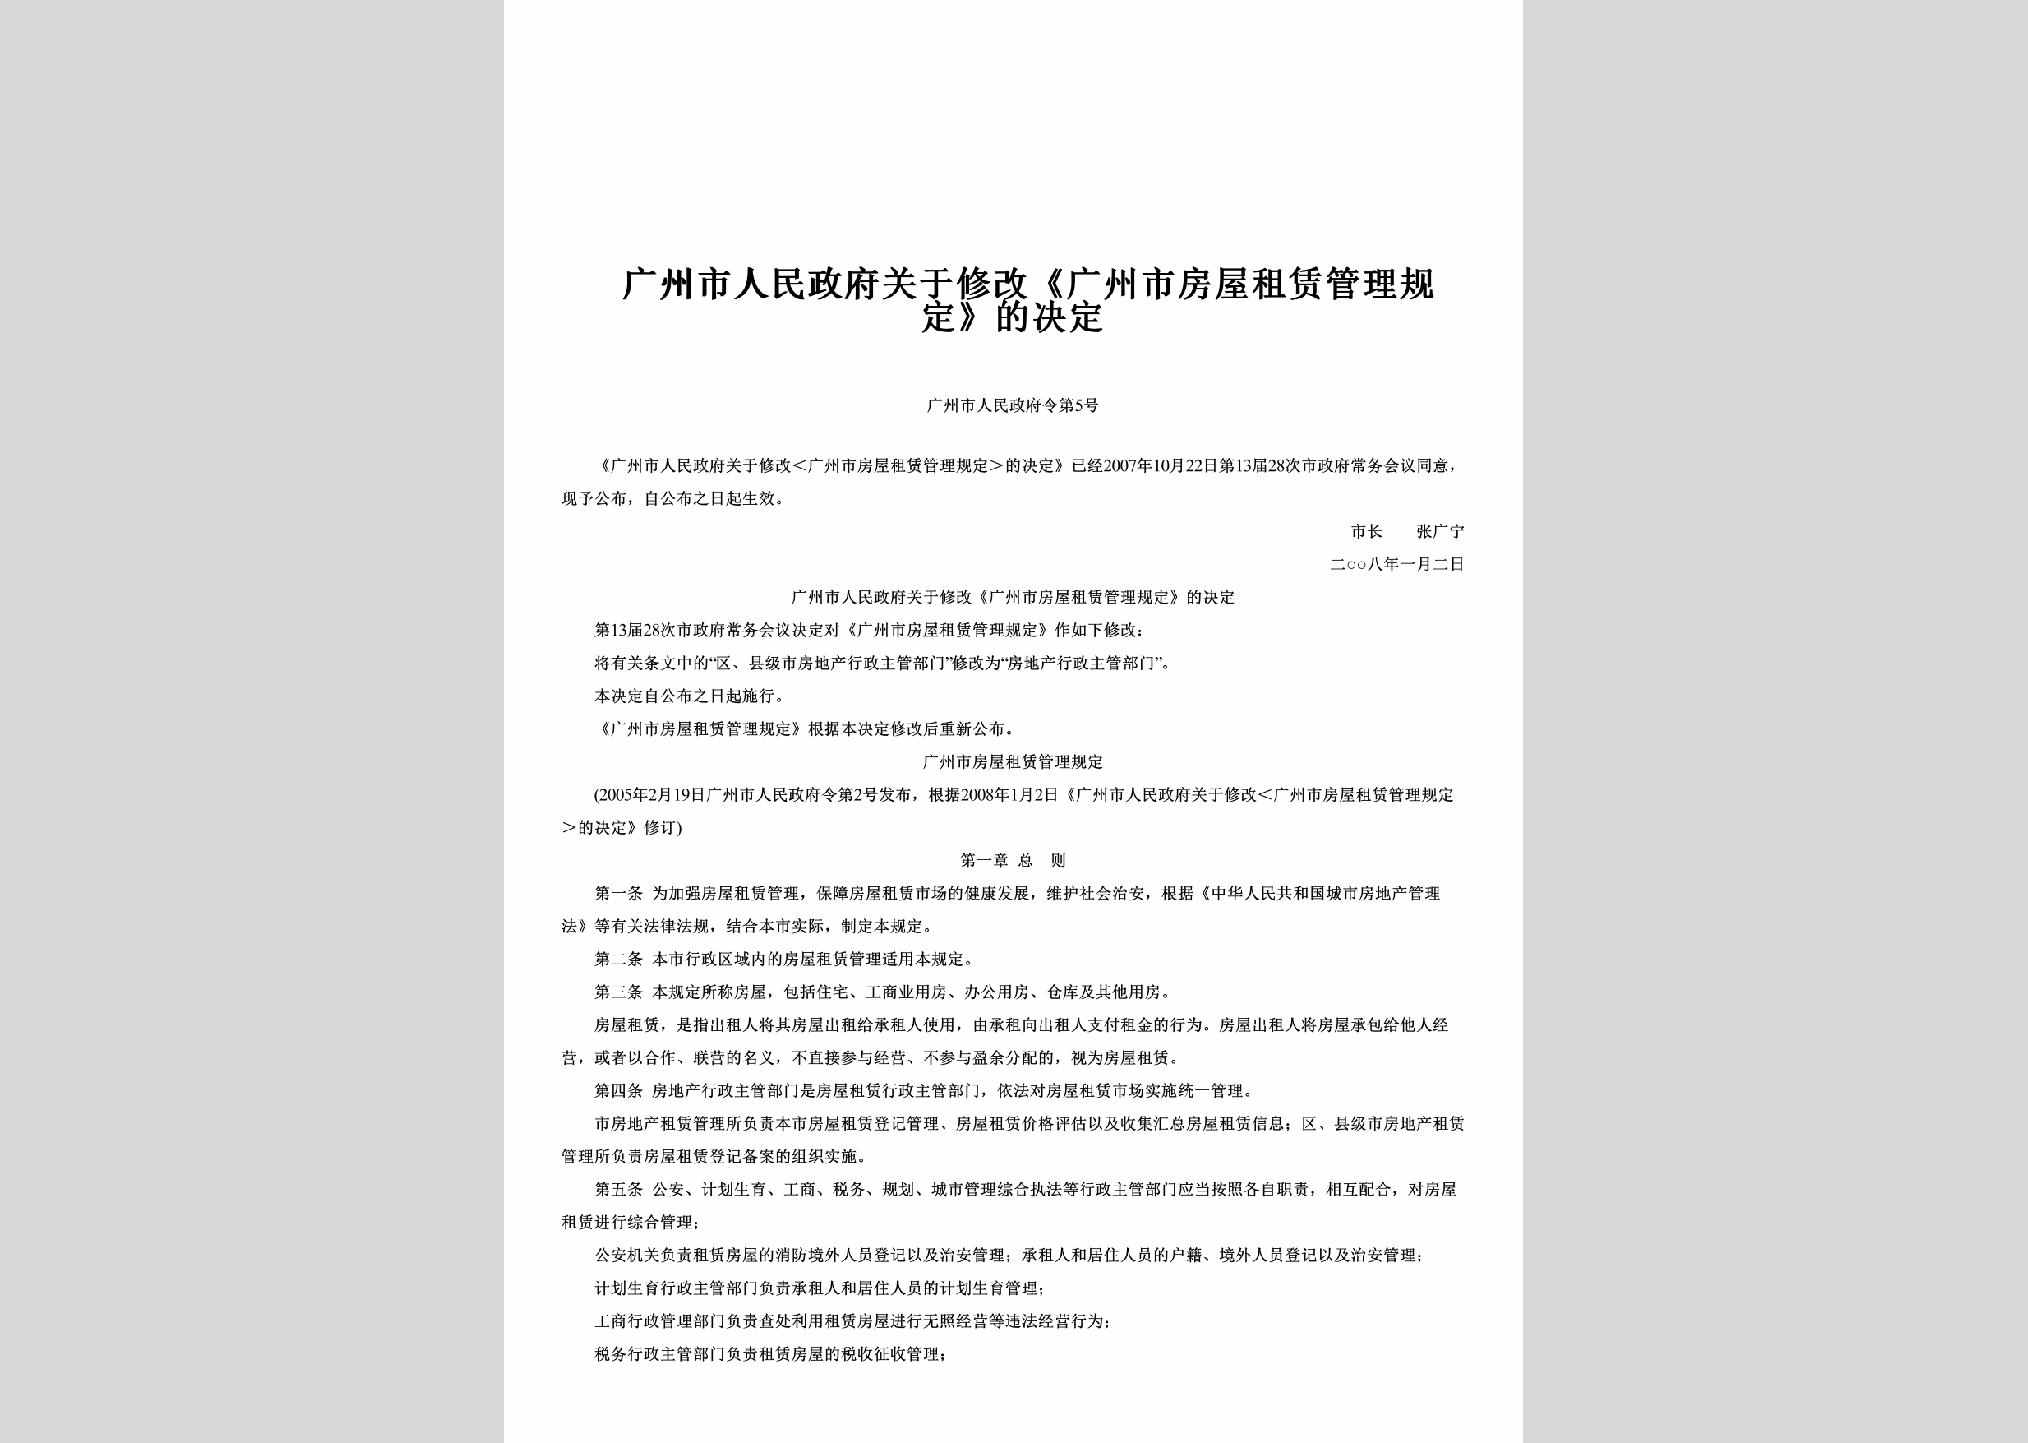 GZSRMZFL-2005-5：关于修改《广州市房屋租赁管理规定》的决定